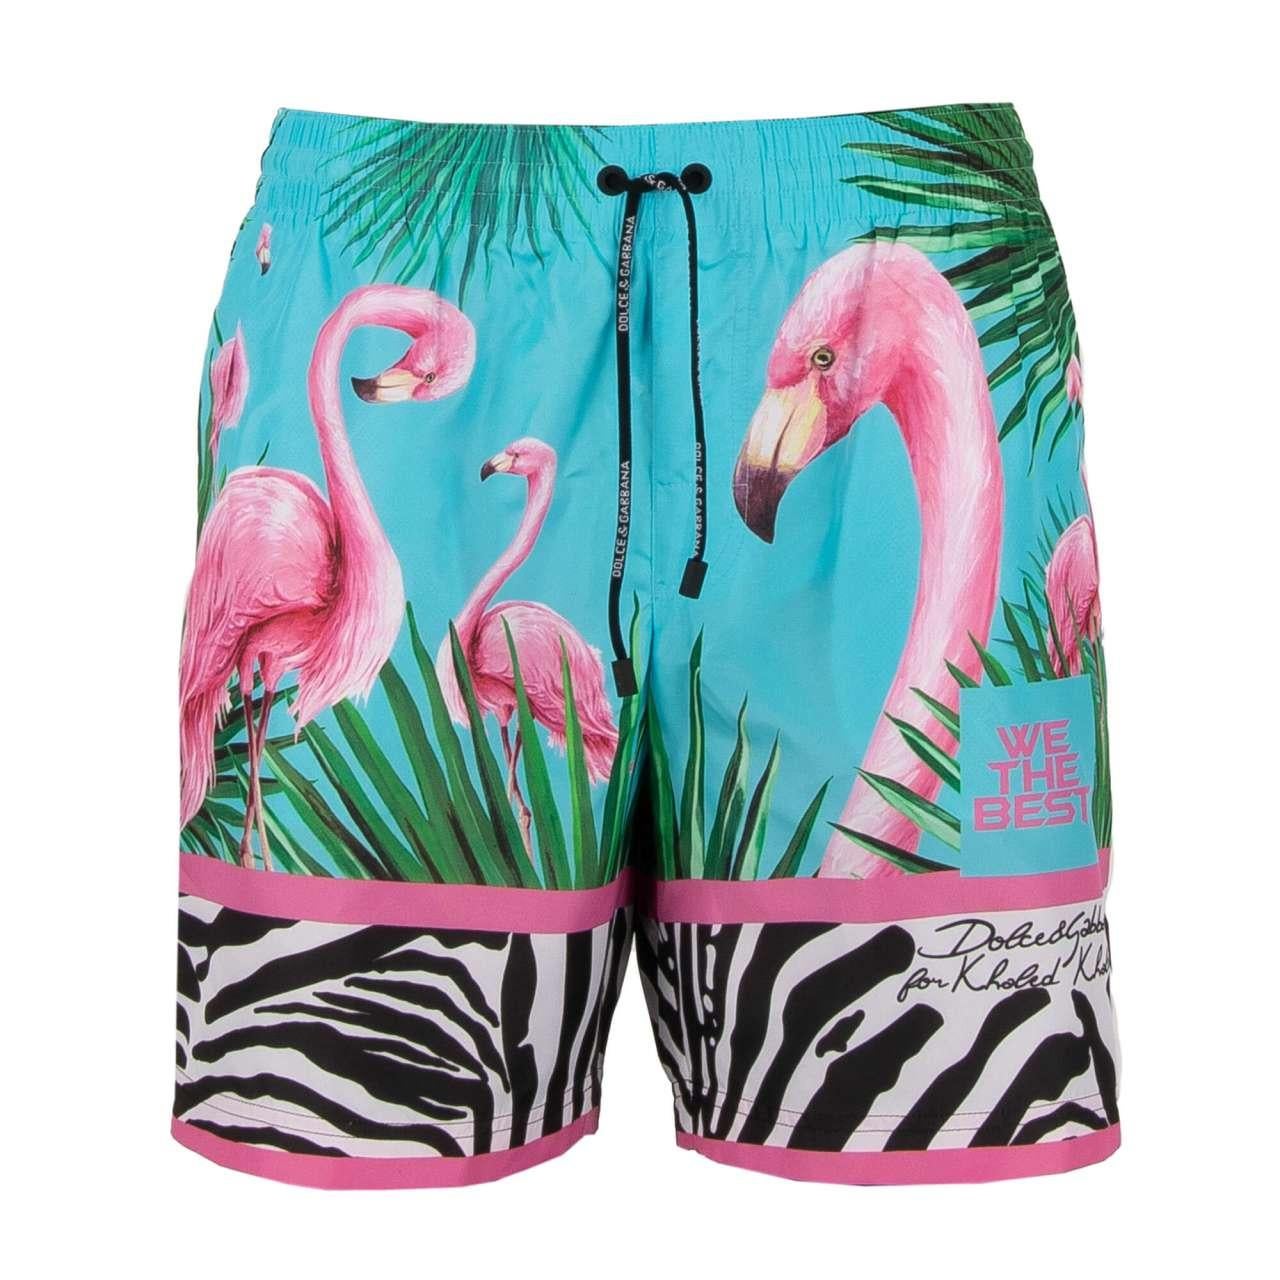 D&G - DJ Khaled Beachwear Swim Shorts with Flamingo Print Pink Blue XL In Excellent Condition For Sale In Erkrath, DE